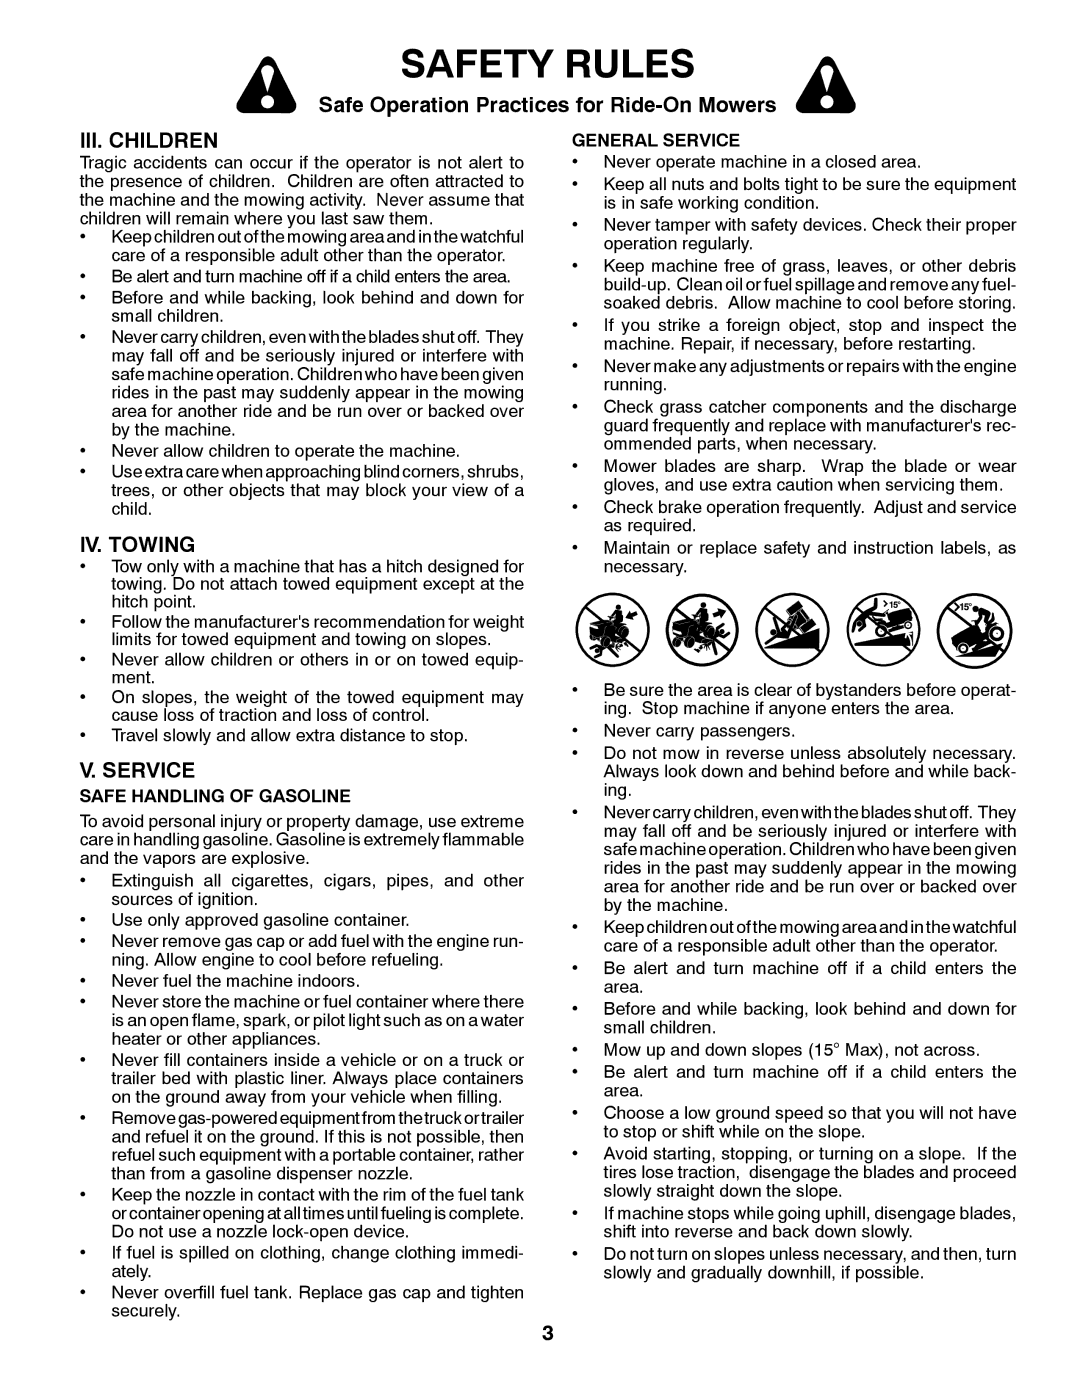 Poulan PP21H42 manual III. Children, IV. Towing, Safe Handling of Gasoline, General Service 